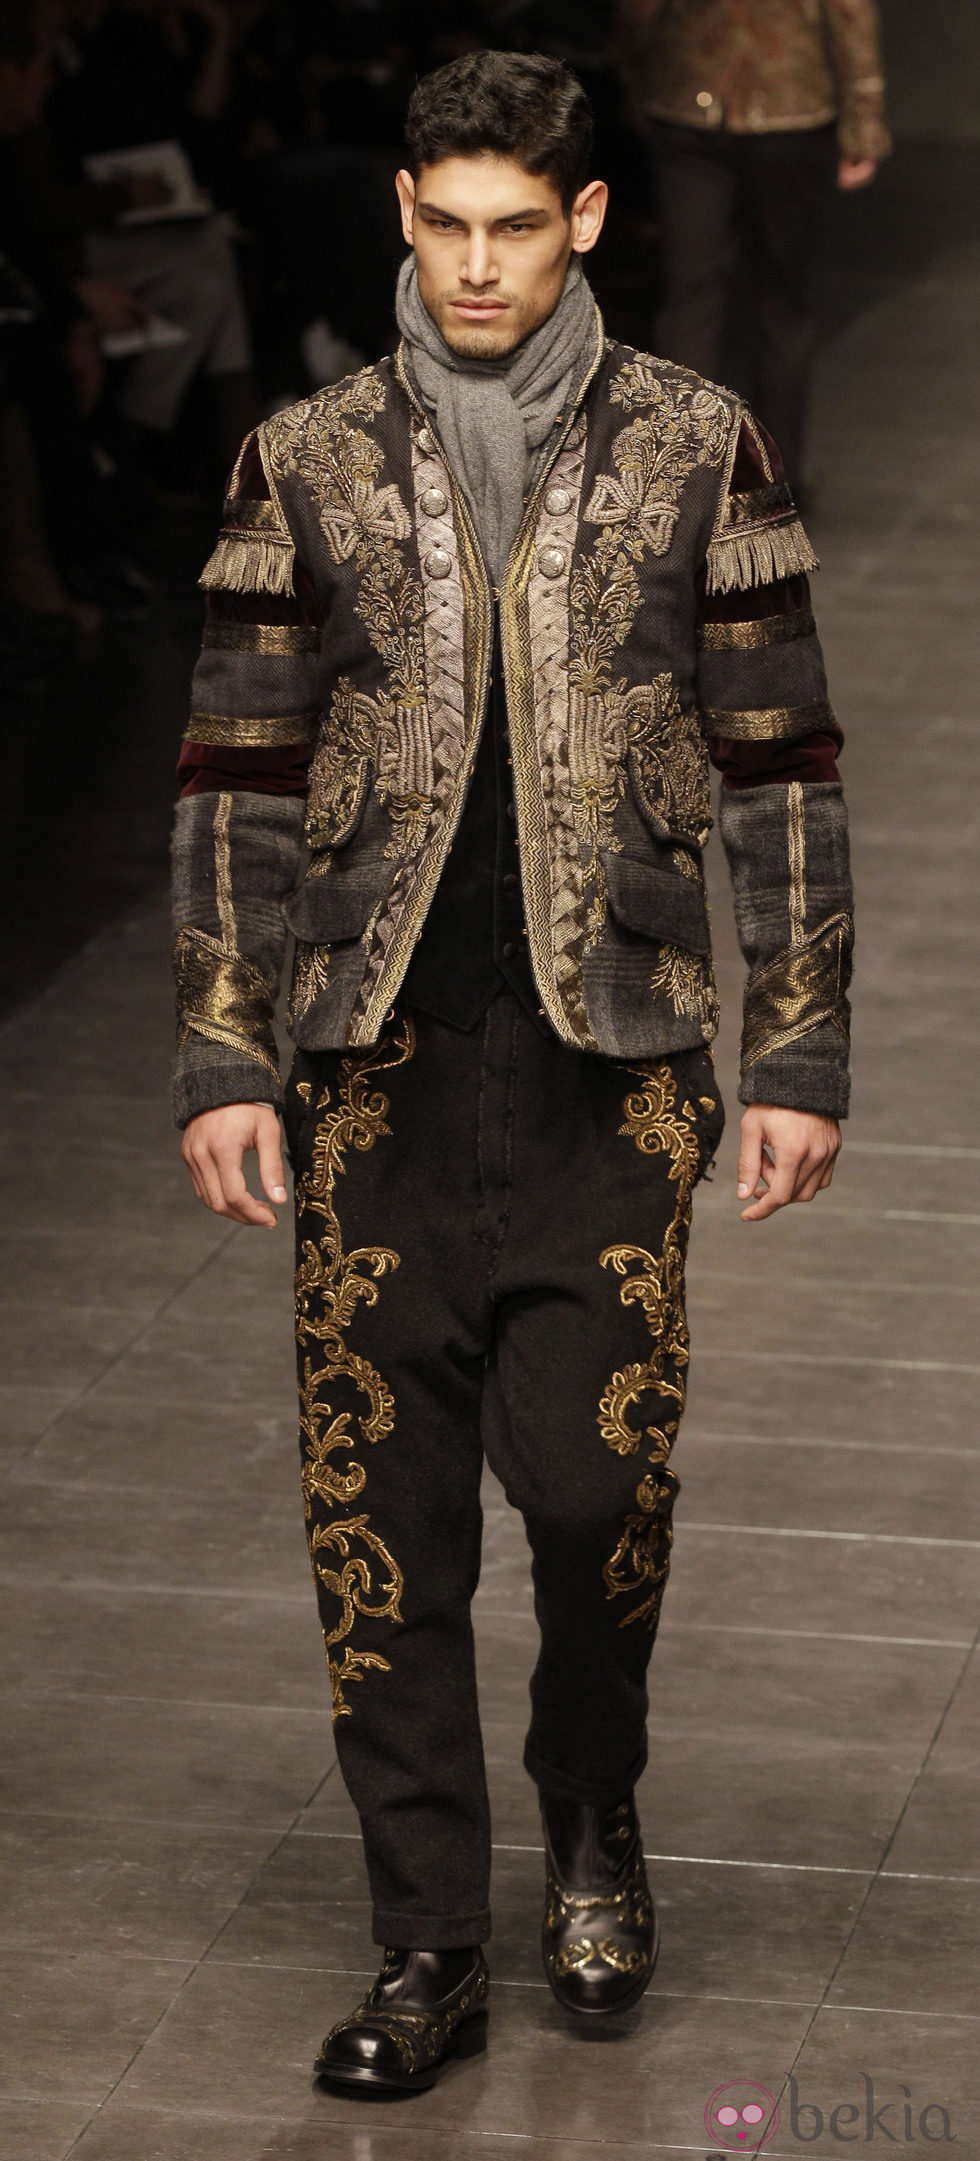 Semana de la moda masculina de Milán 2012: Dolce&Gabbana